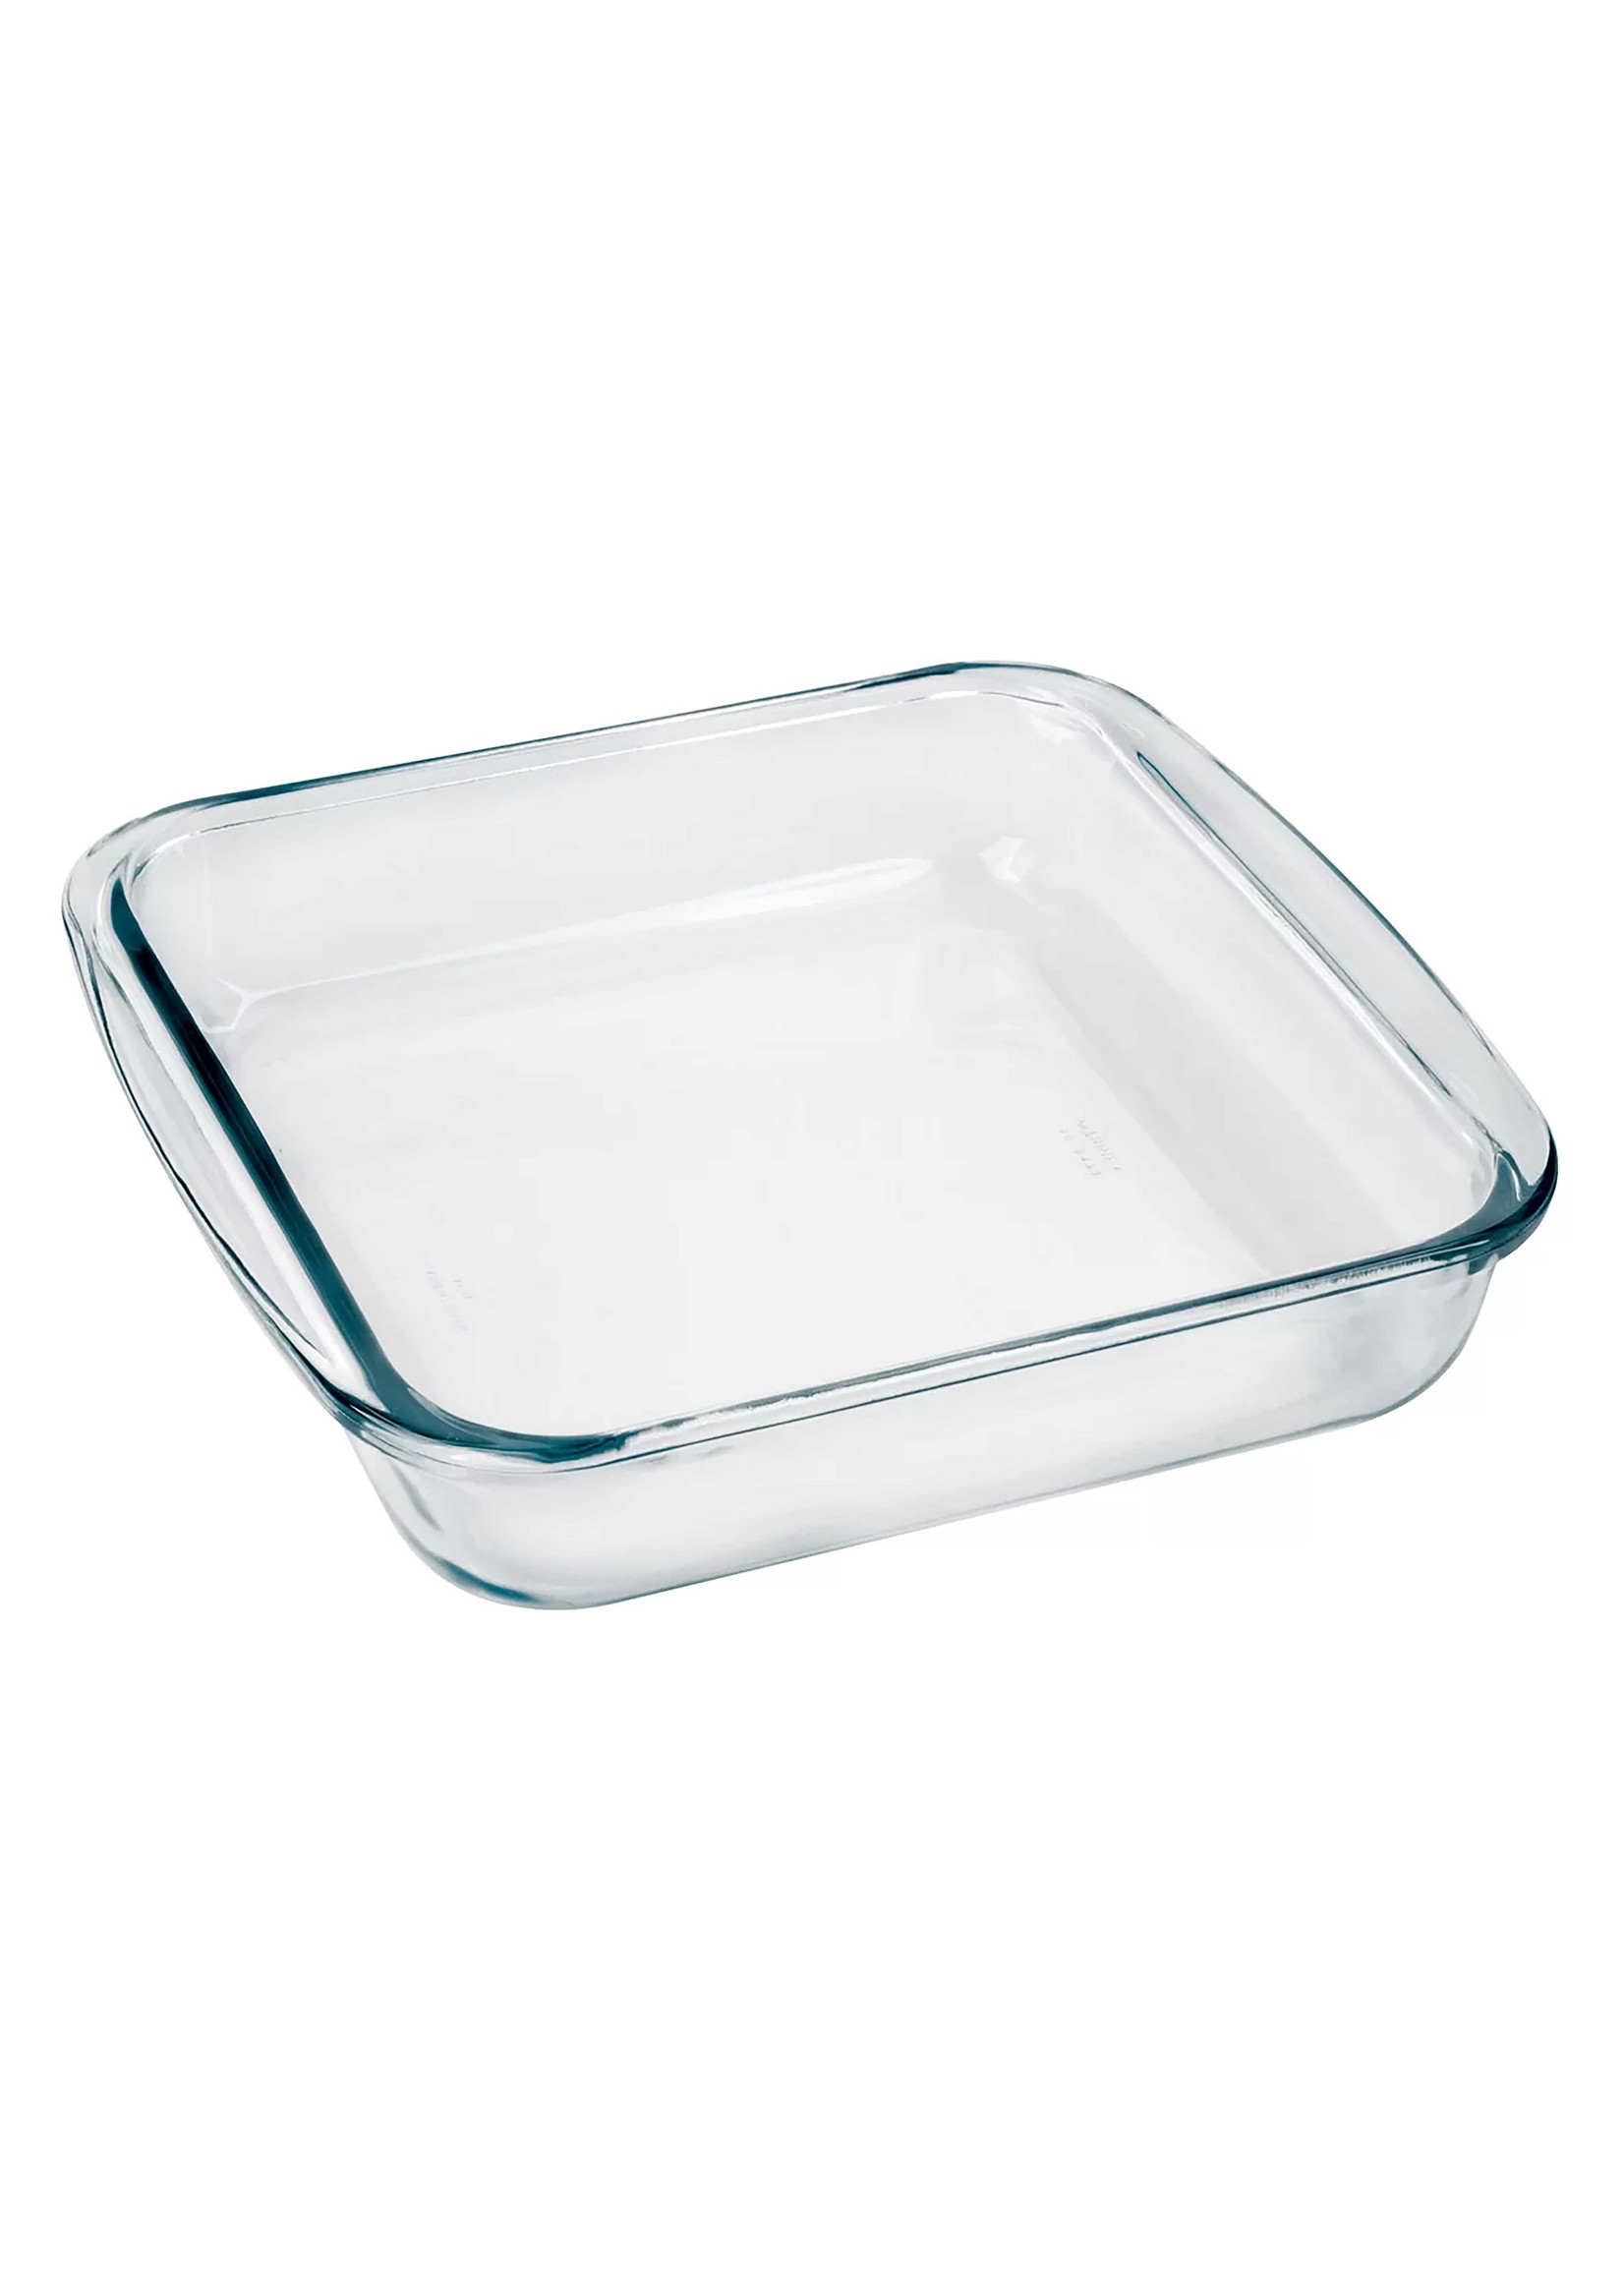 KAYALI 1.8L Marinex Square Glass Baking Dish